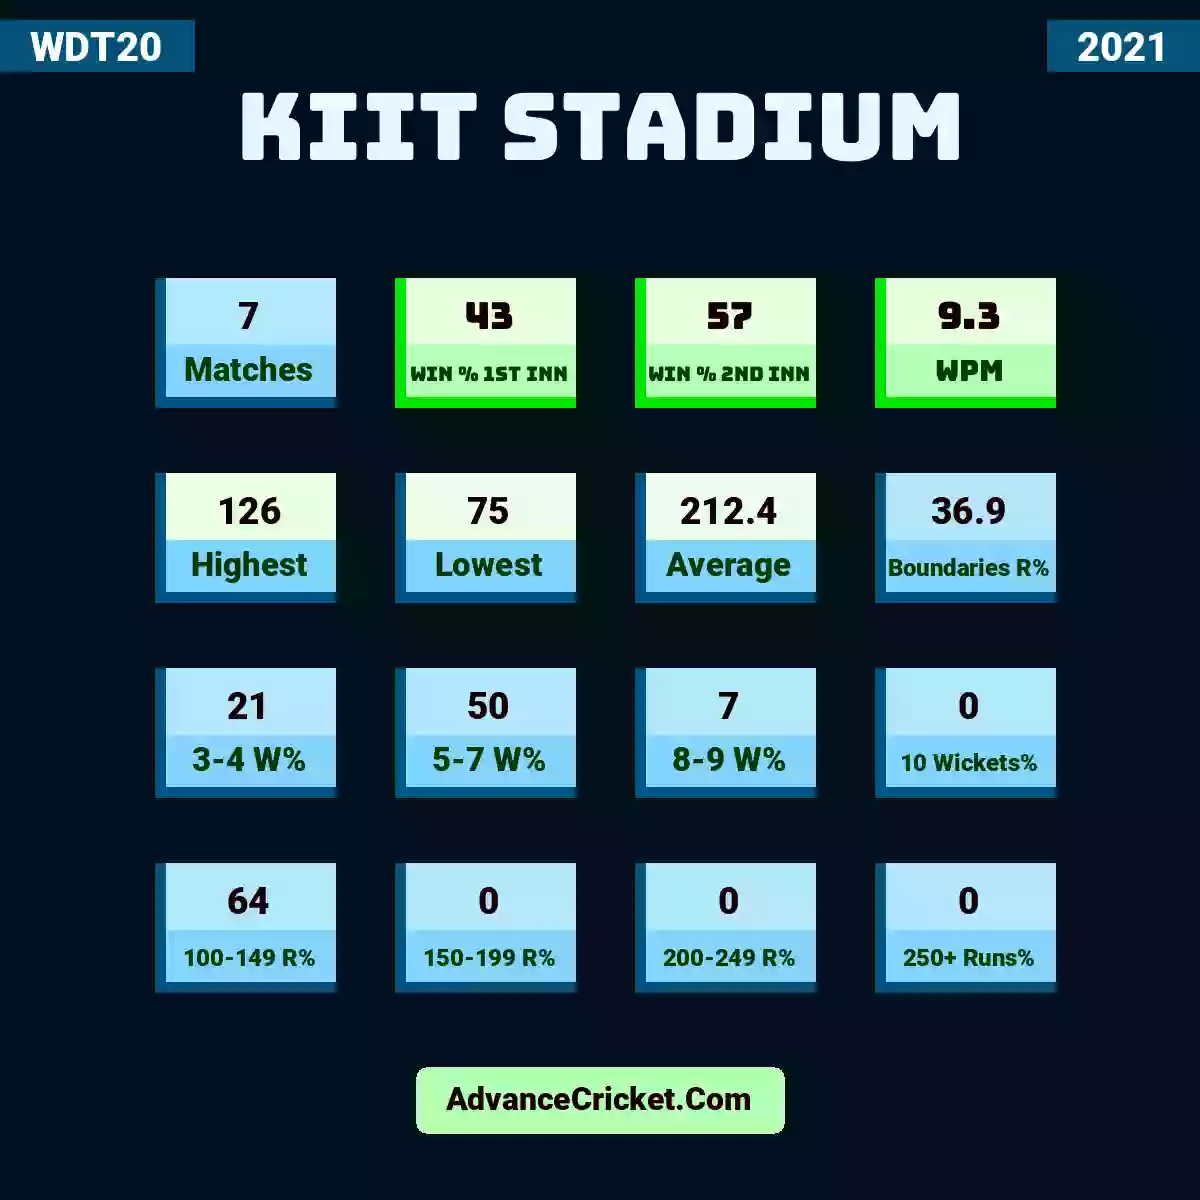 Image showing KIIT Stadium with Matches: 7, Win % 1st Inn: 43, Win % 2nd Inn: 57, WPM: 9.3, Highest: 126, Lowest: 75, Average: 212.4, Boundaries R%: 36.9, 3-4 W%: 21, 5-7 W%: 50, 8-9 W%: 7, 10 Wickets%: 0, 100-149 R%: 64, 150-199 R%: 0, 200-249 R%: 0, 250+ Runs%: 0.